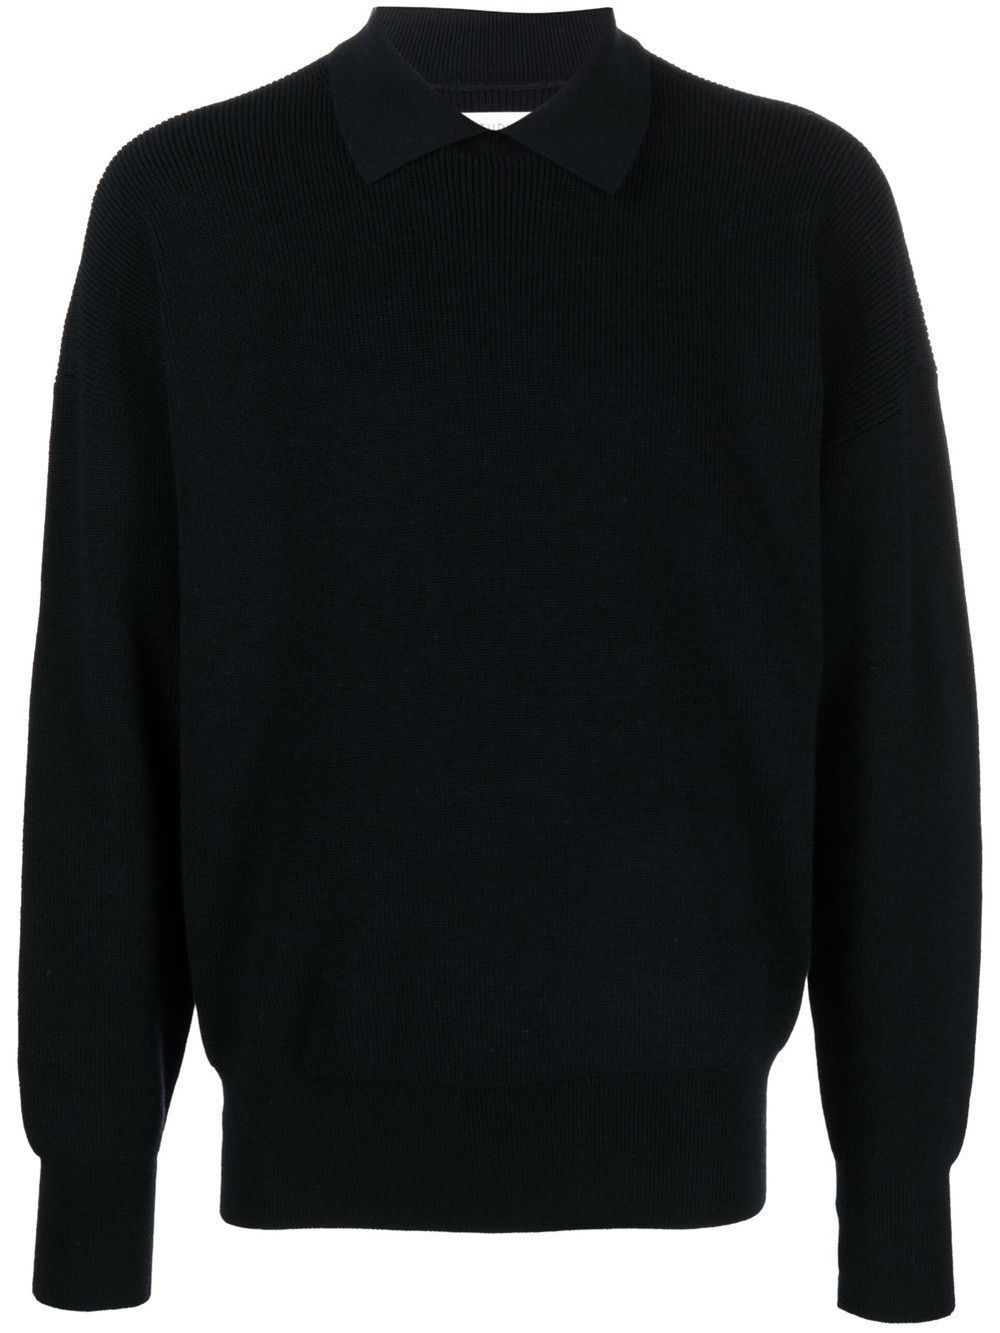 long-sleeve knitted polo shirt | Studio Nicholson | Eraldo.com